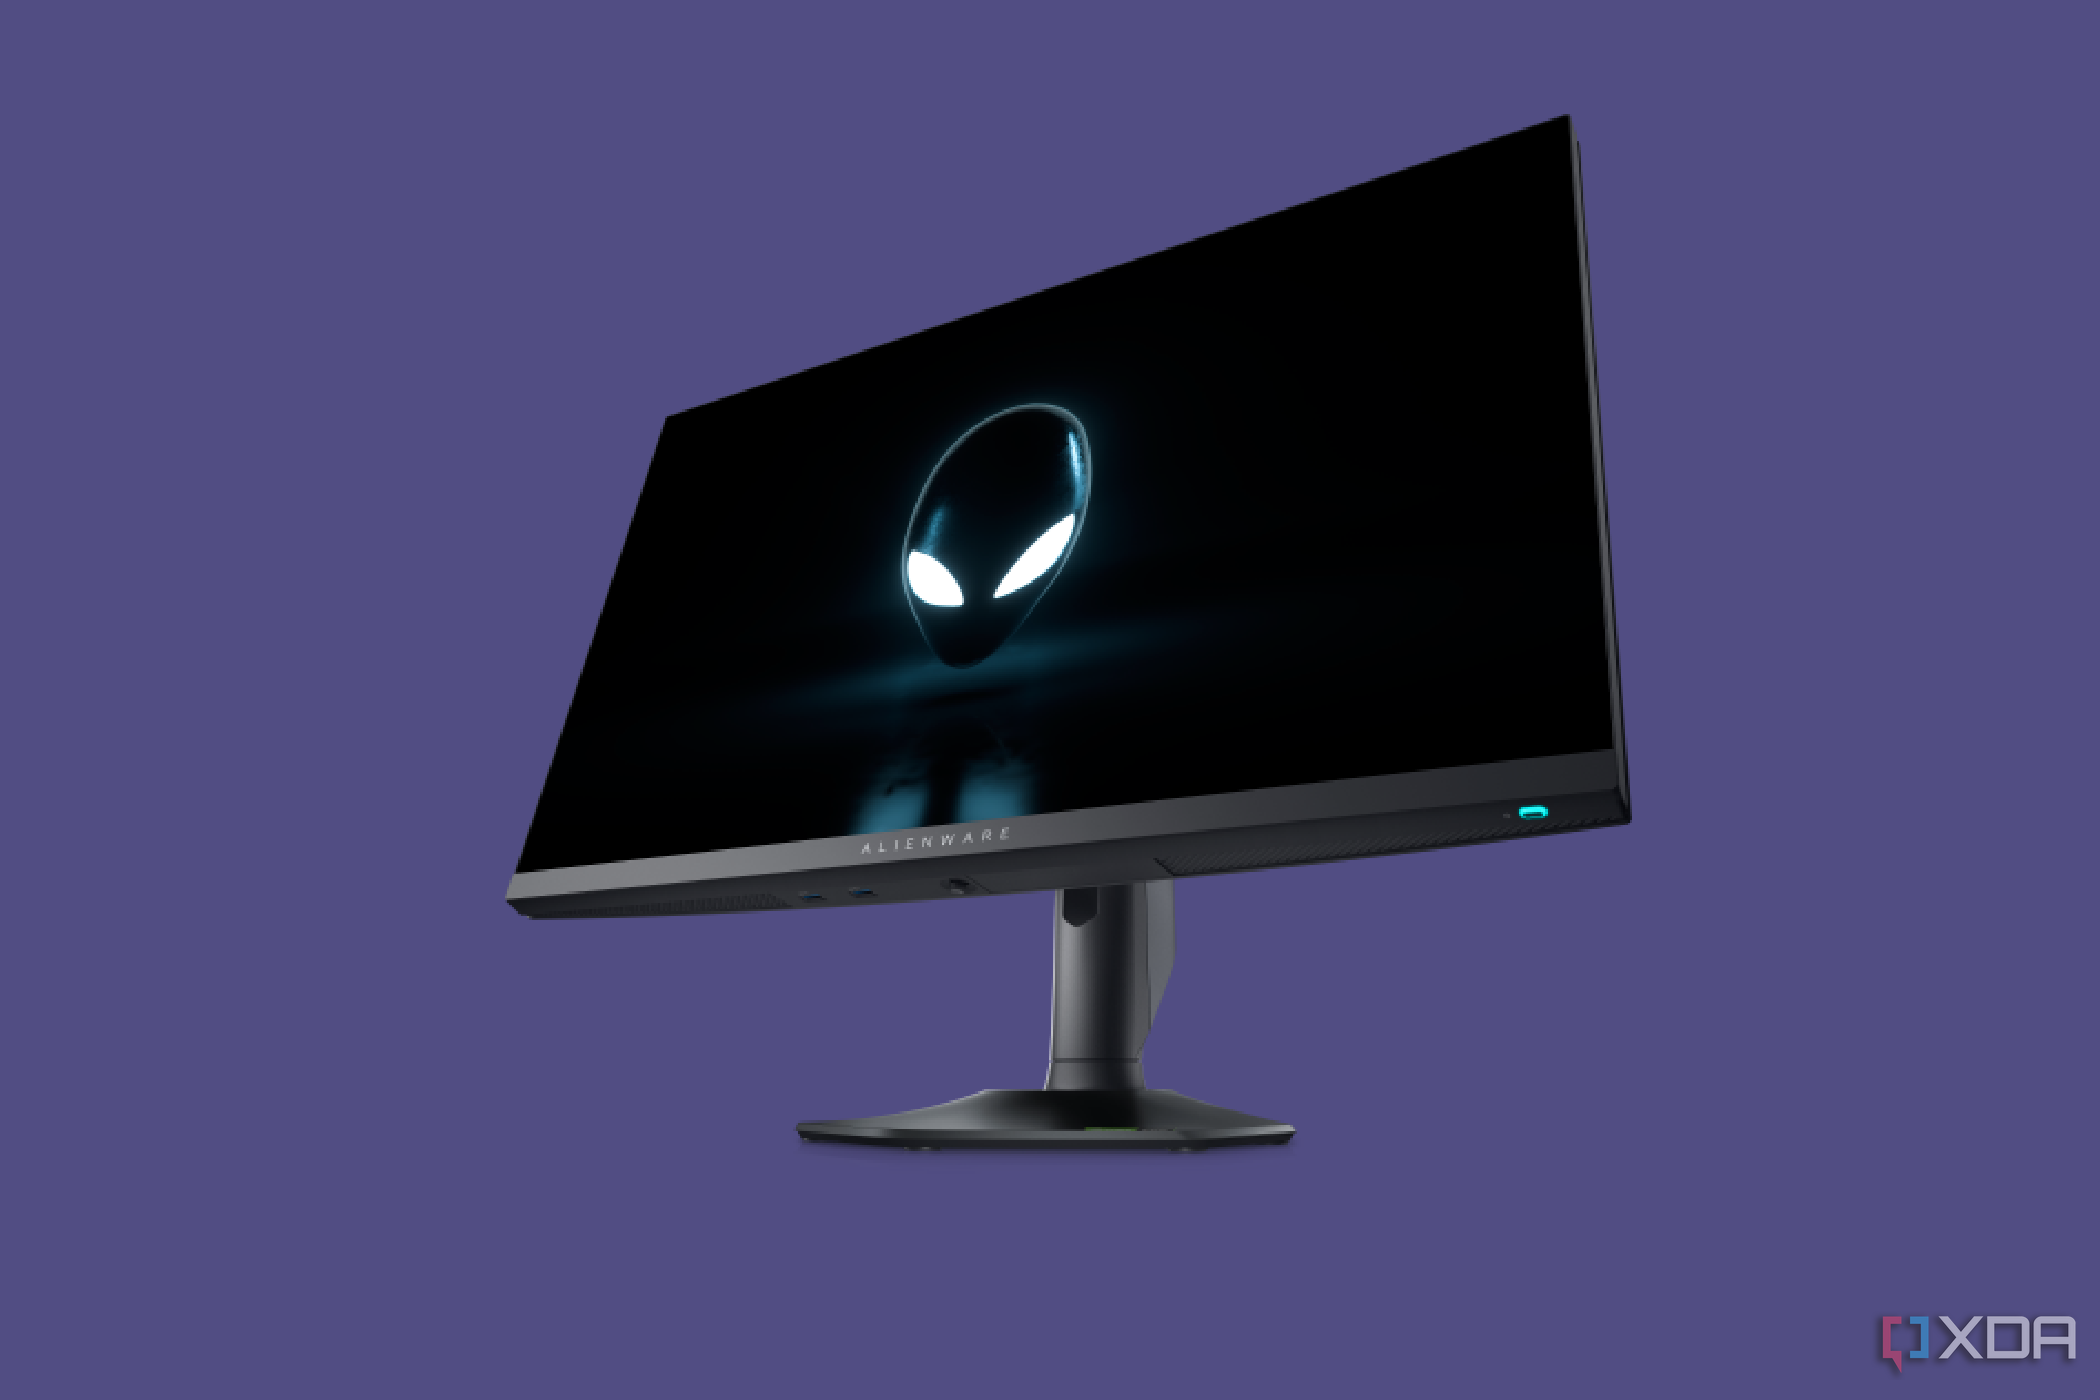 Alienware 27 inch Gaming Monitor (AW2724HF) - Computer Monitors